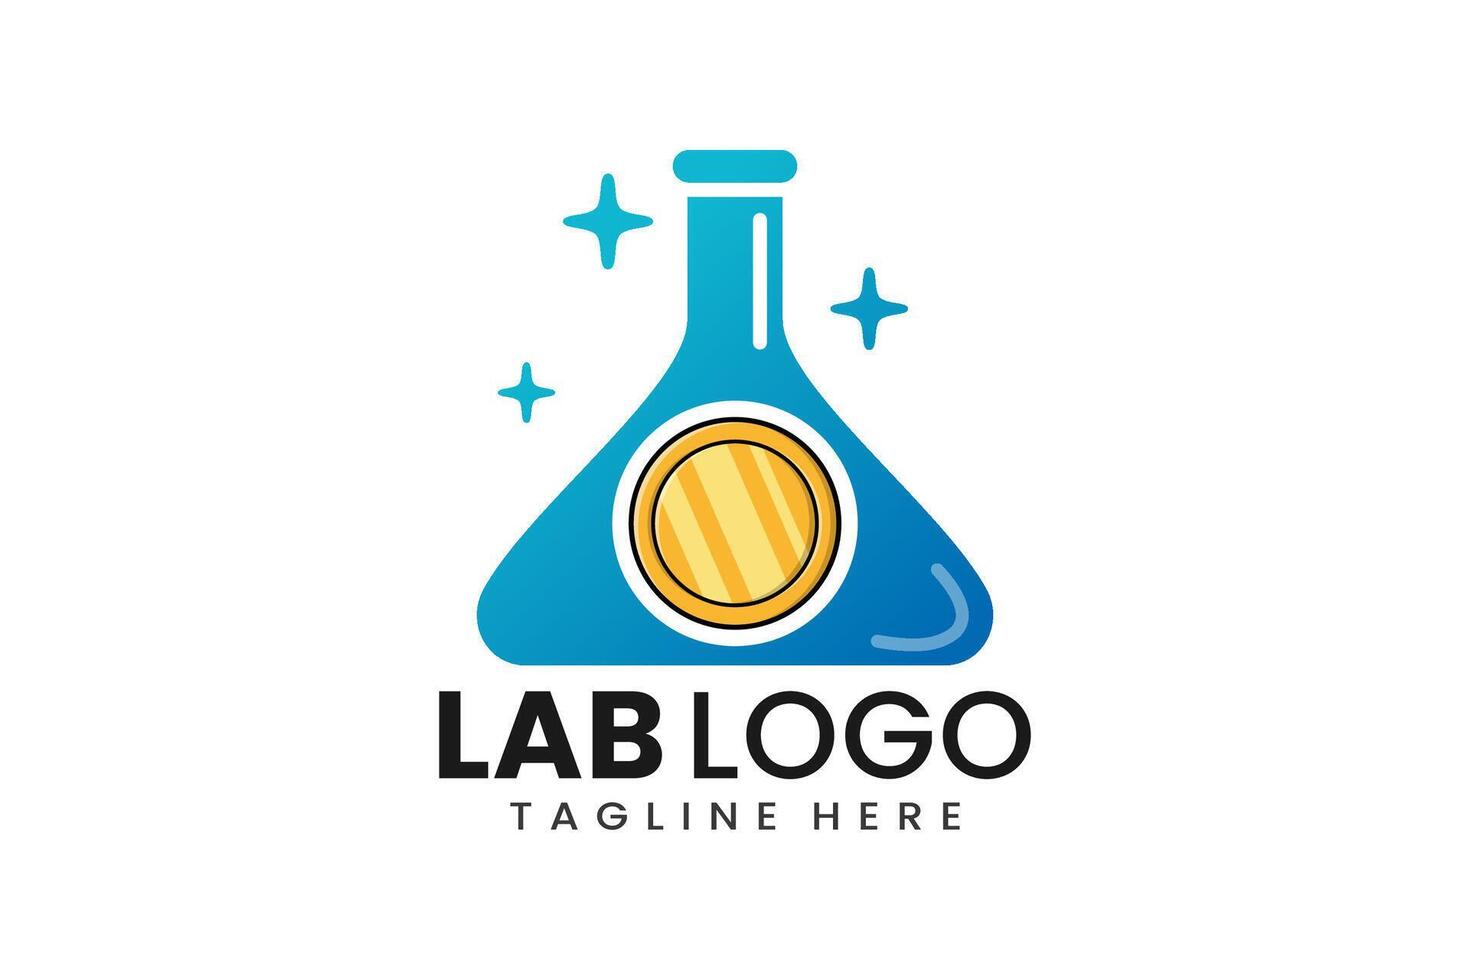 Flat modern simple gold coin laboratory logo template icon symbol design illustration vector